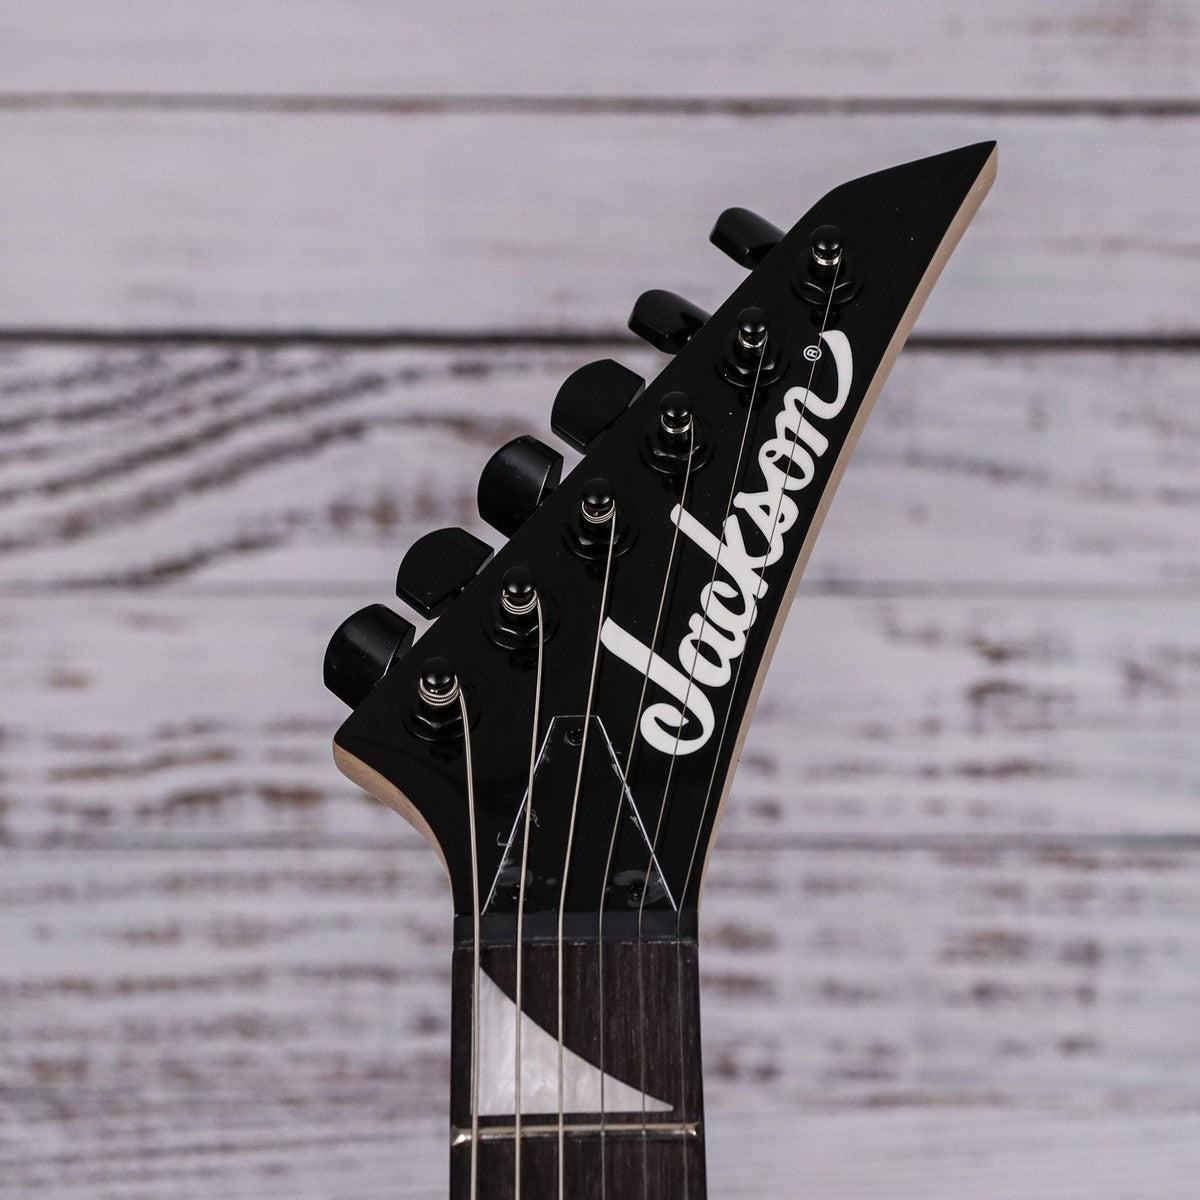 Jackson JS1X Minion Dinky Electric Guitar | Metallic Blue Burst